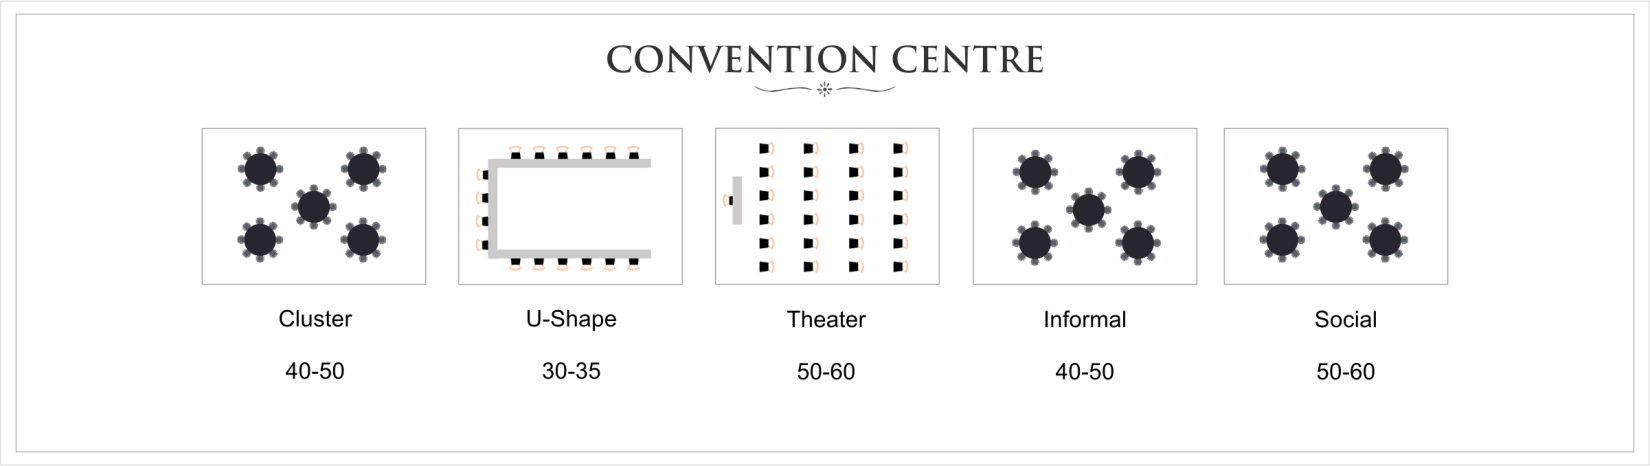 CONVENTION CENTRE